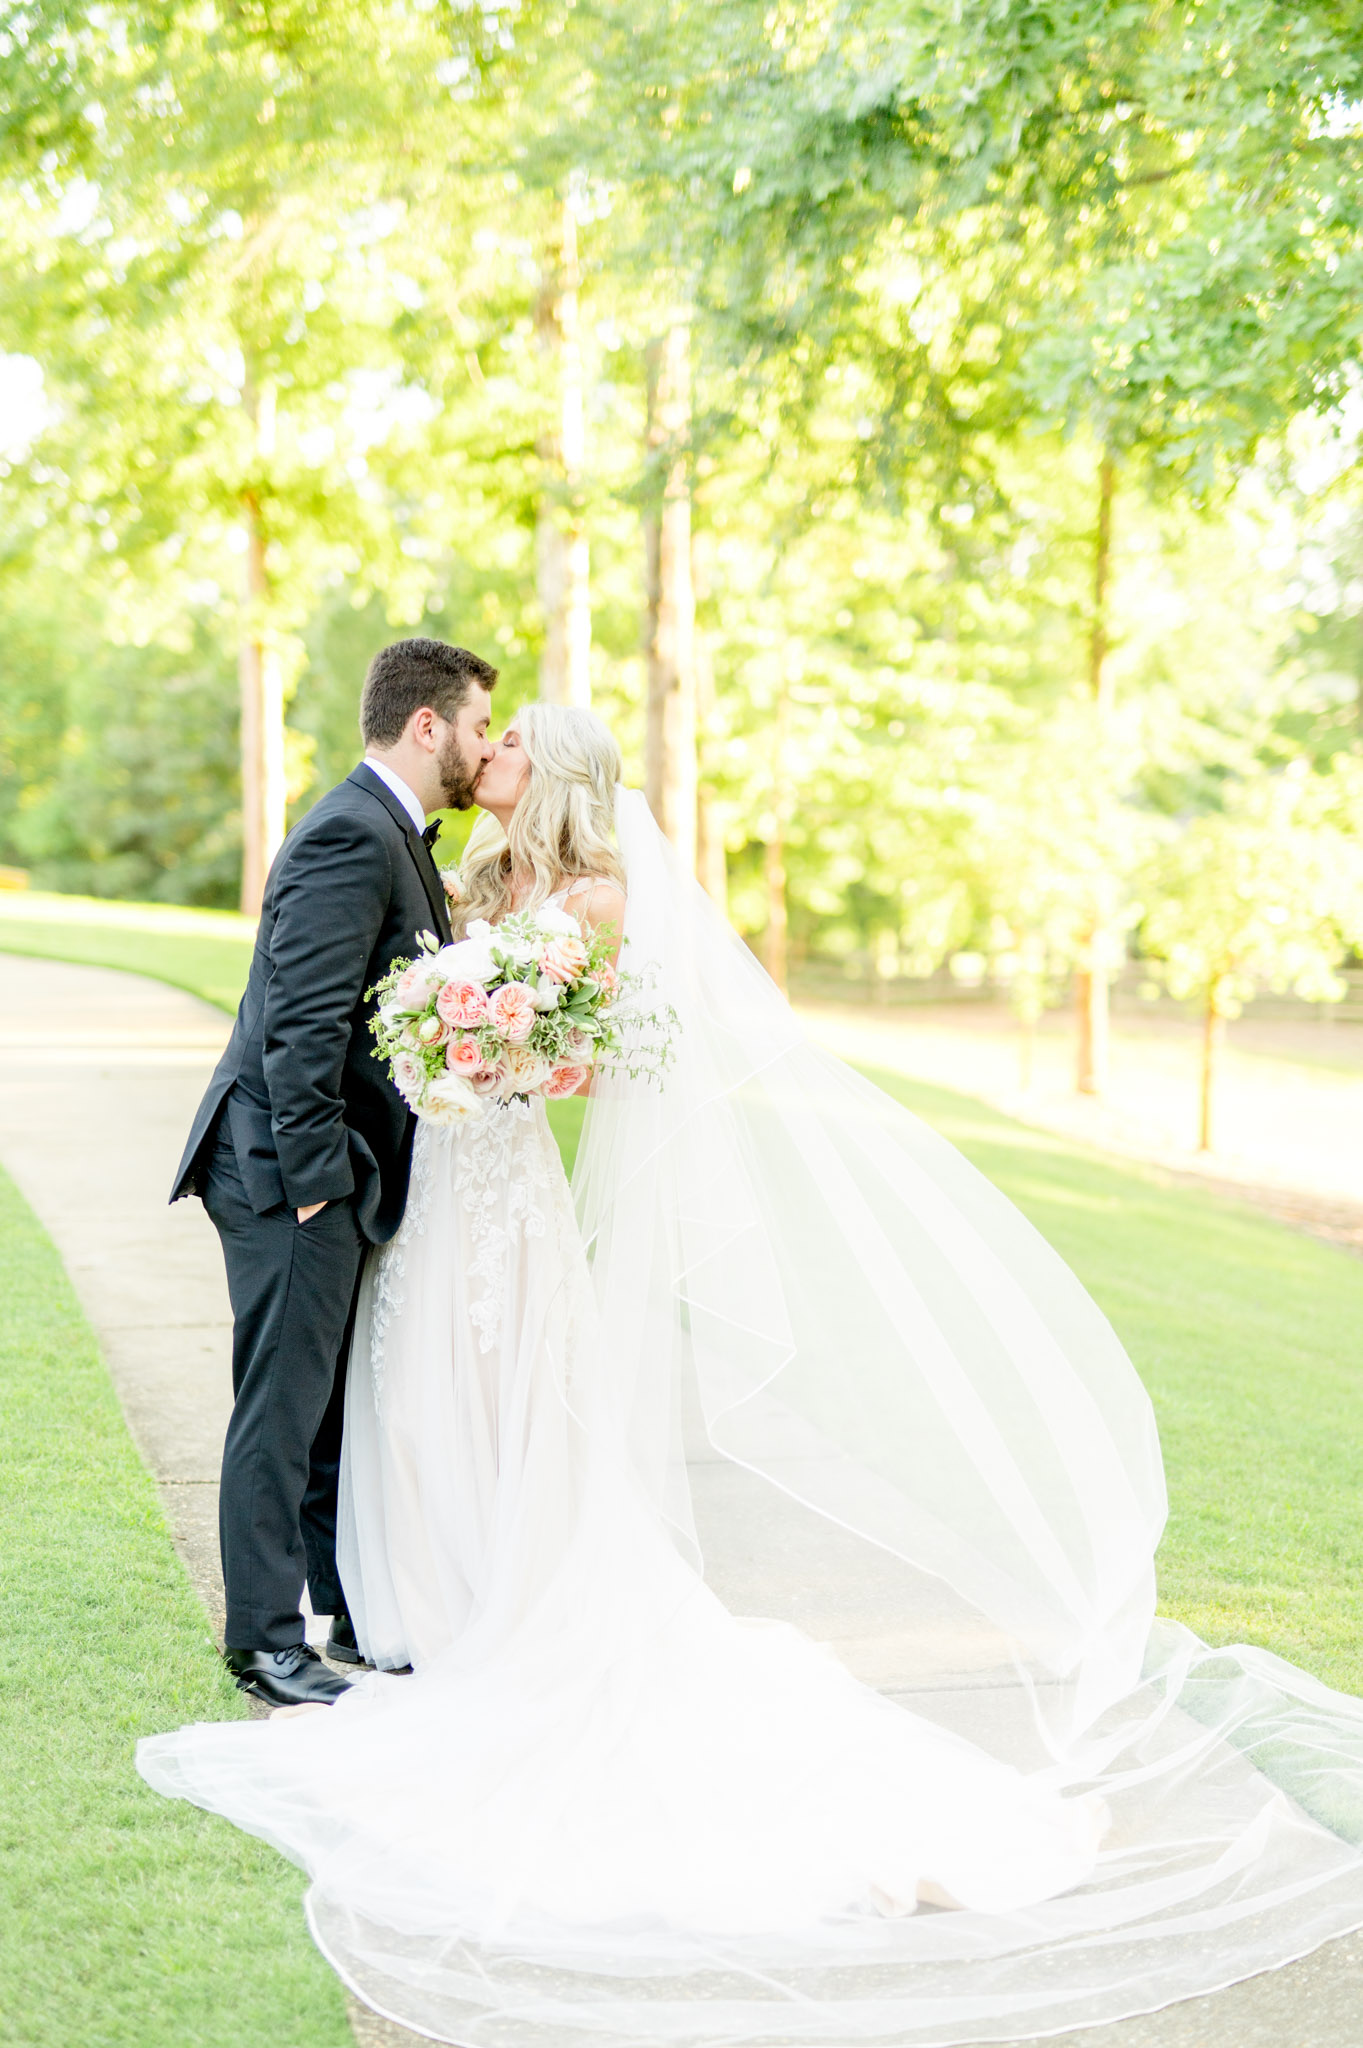 Groom kisses bride as her veil blows in the wind.